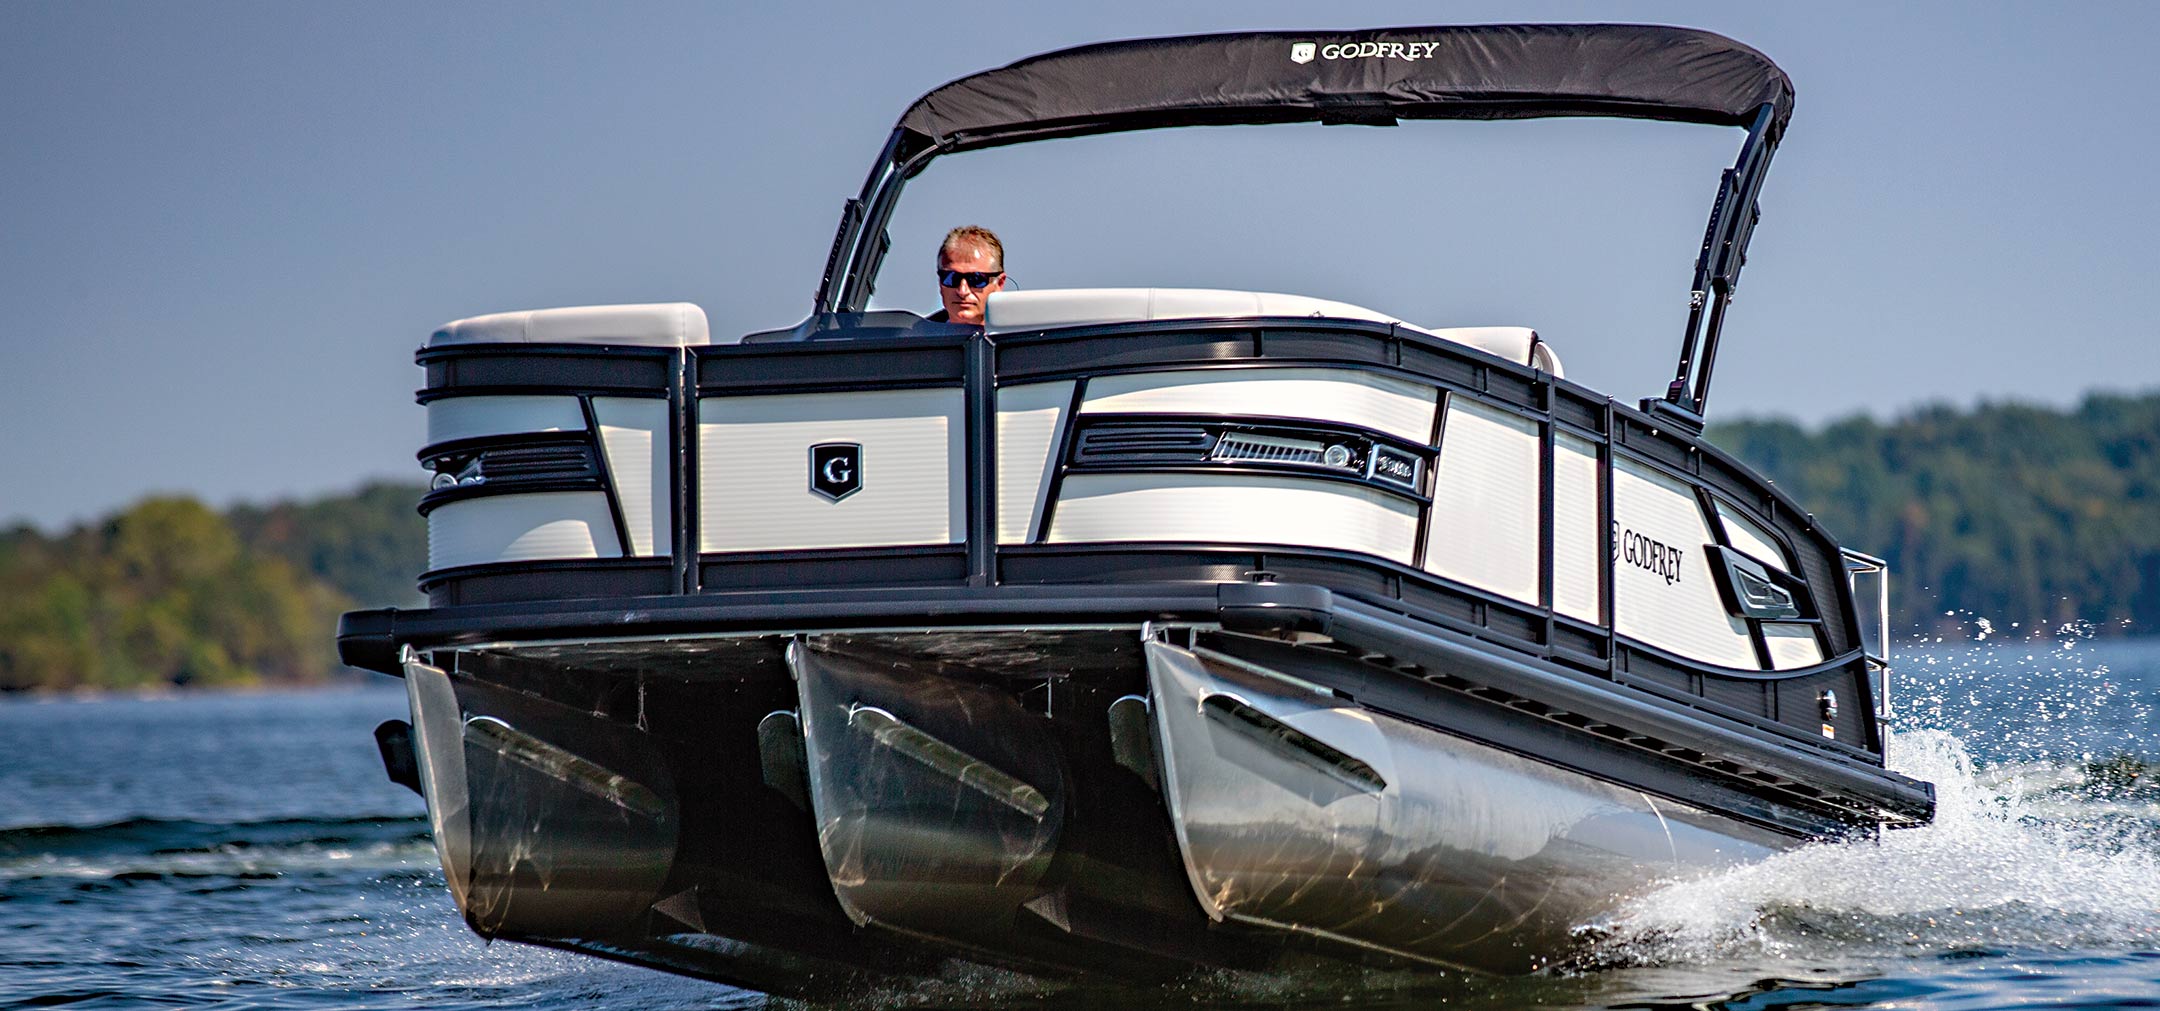 Man driving a black and white Godfrey Pontoon boat